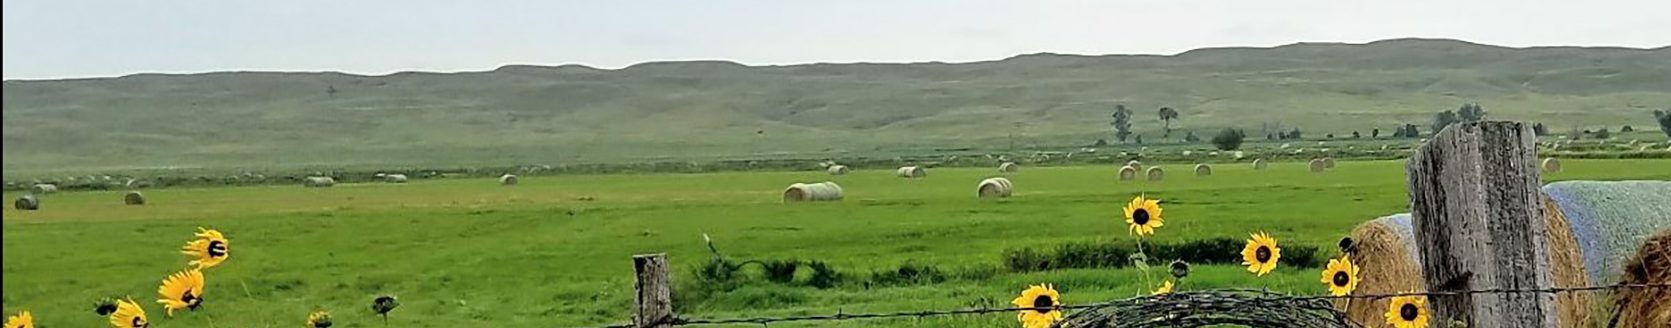 Open fields of cut hay. (Photo by Chabella Guzman.)